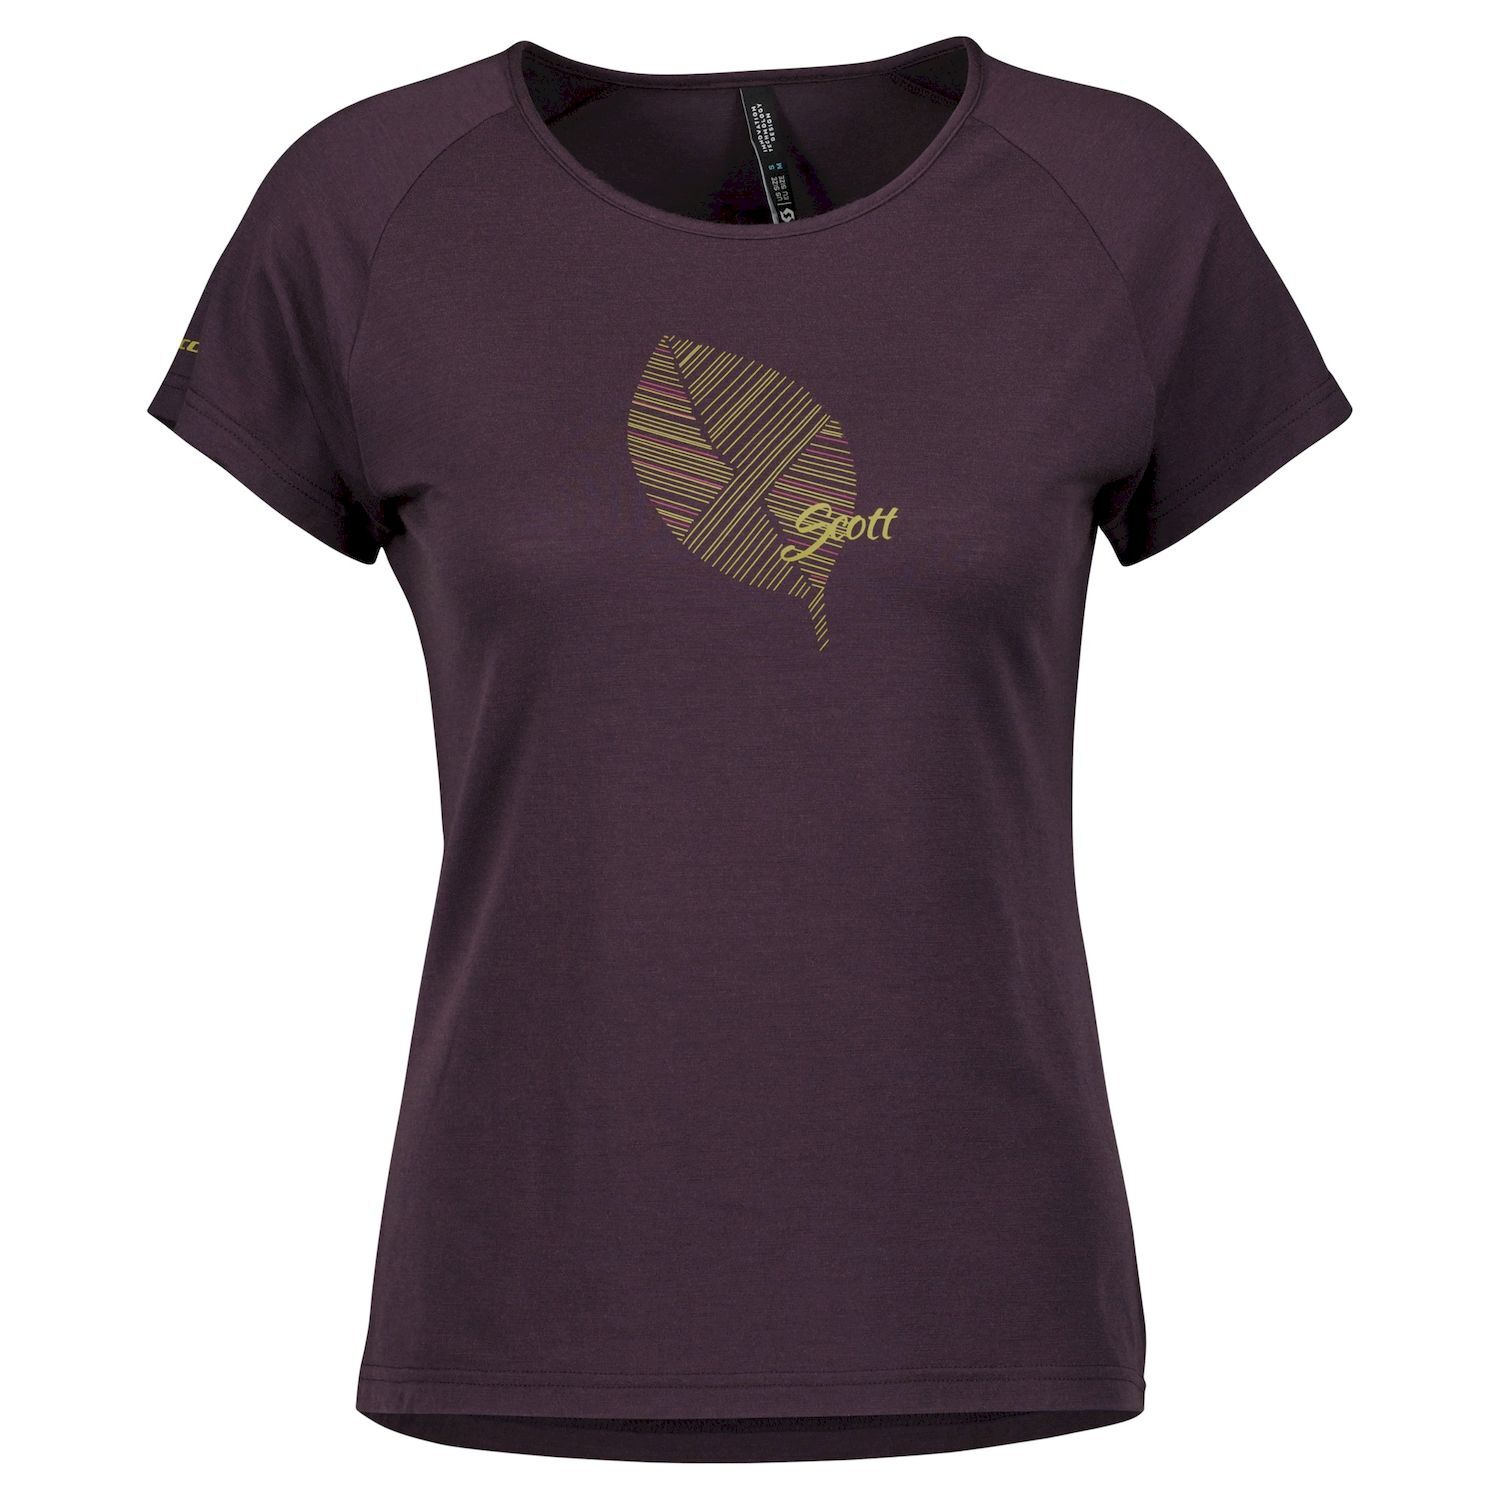 Scott Defined Merino Short-Sleeve Shirt - T-shirt - Women's